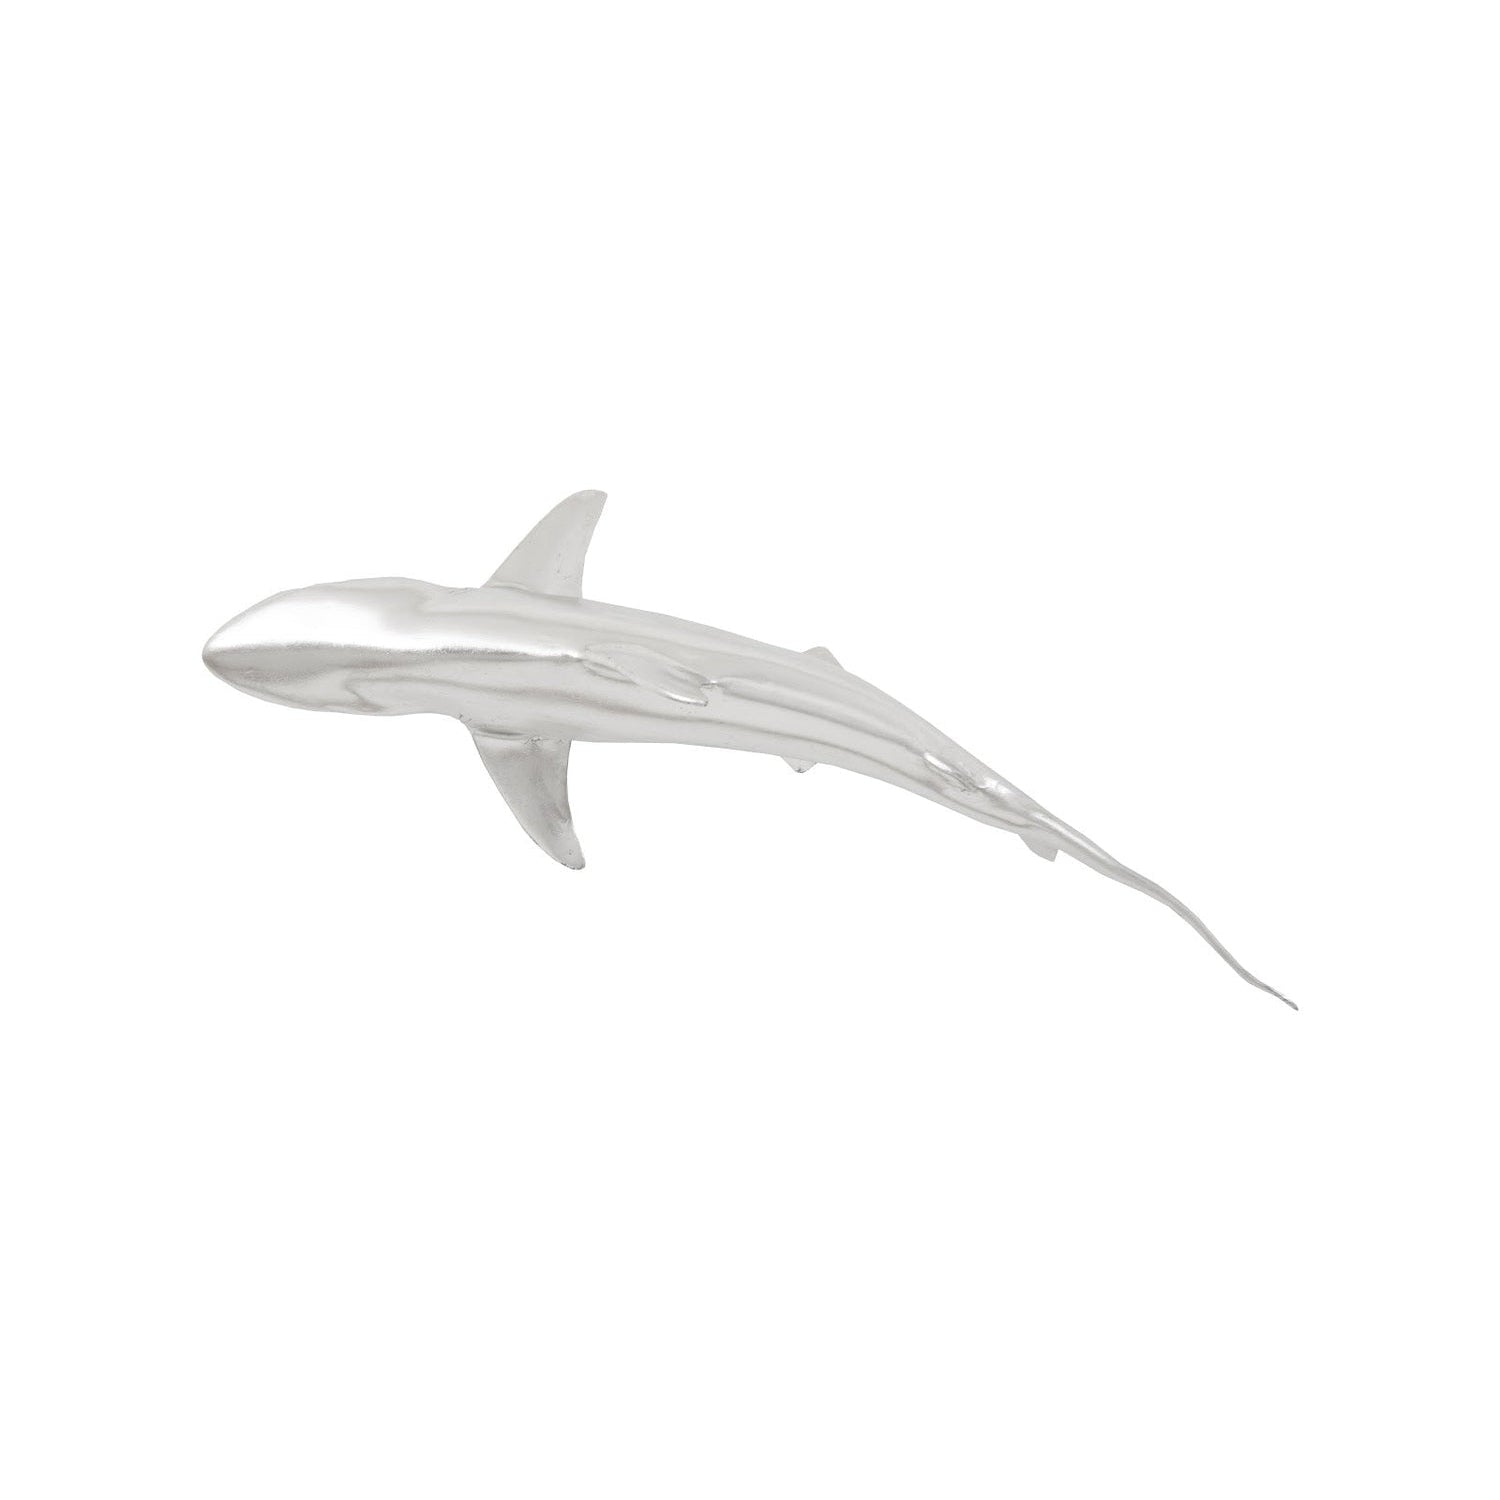 Phillips Collection, Whaler Shark Fish Wall Sculpture